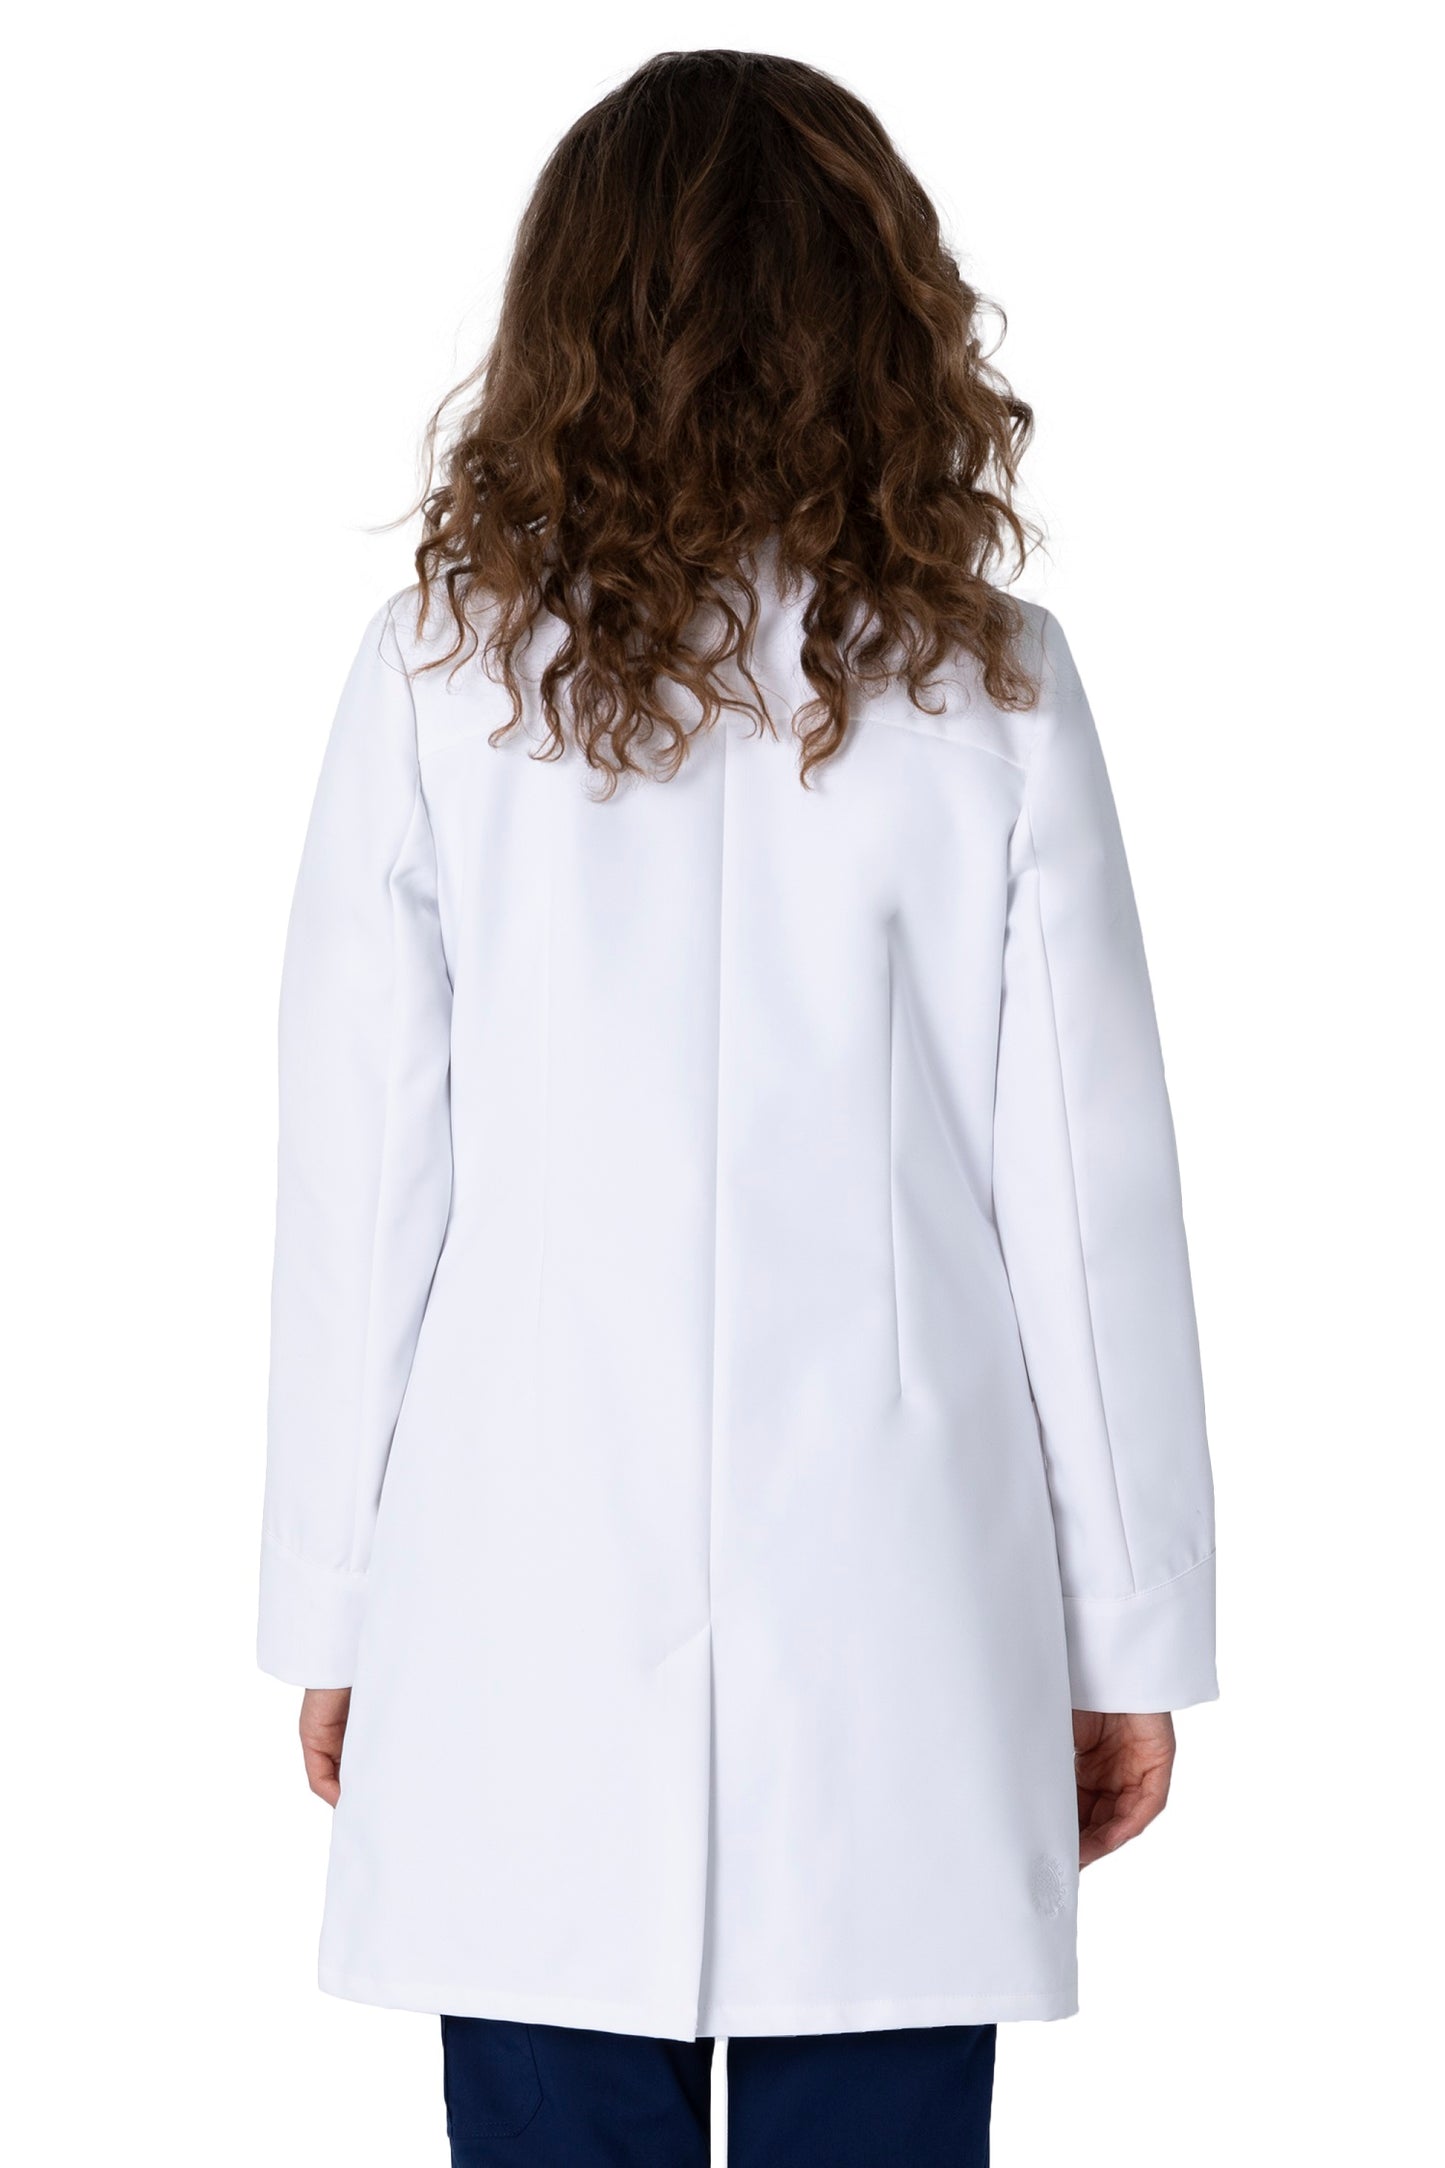 Healing Hands 5102 Farrah Lab Coat White Back 